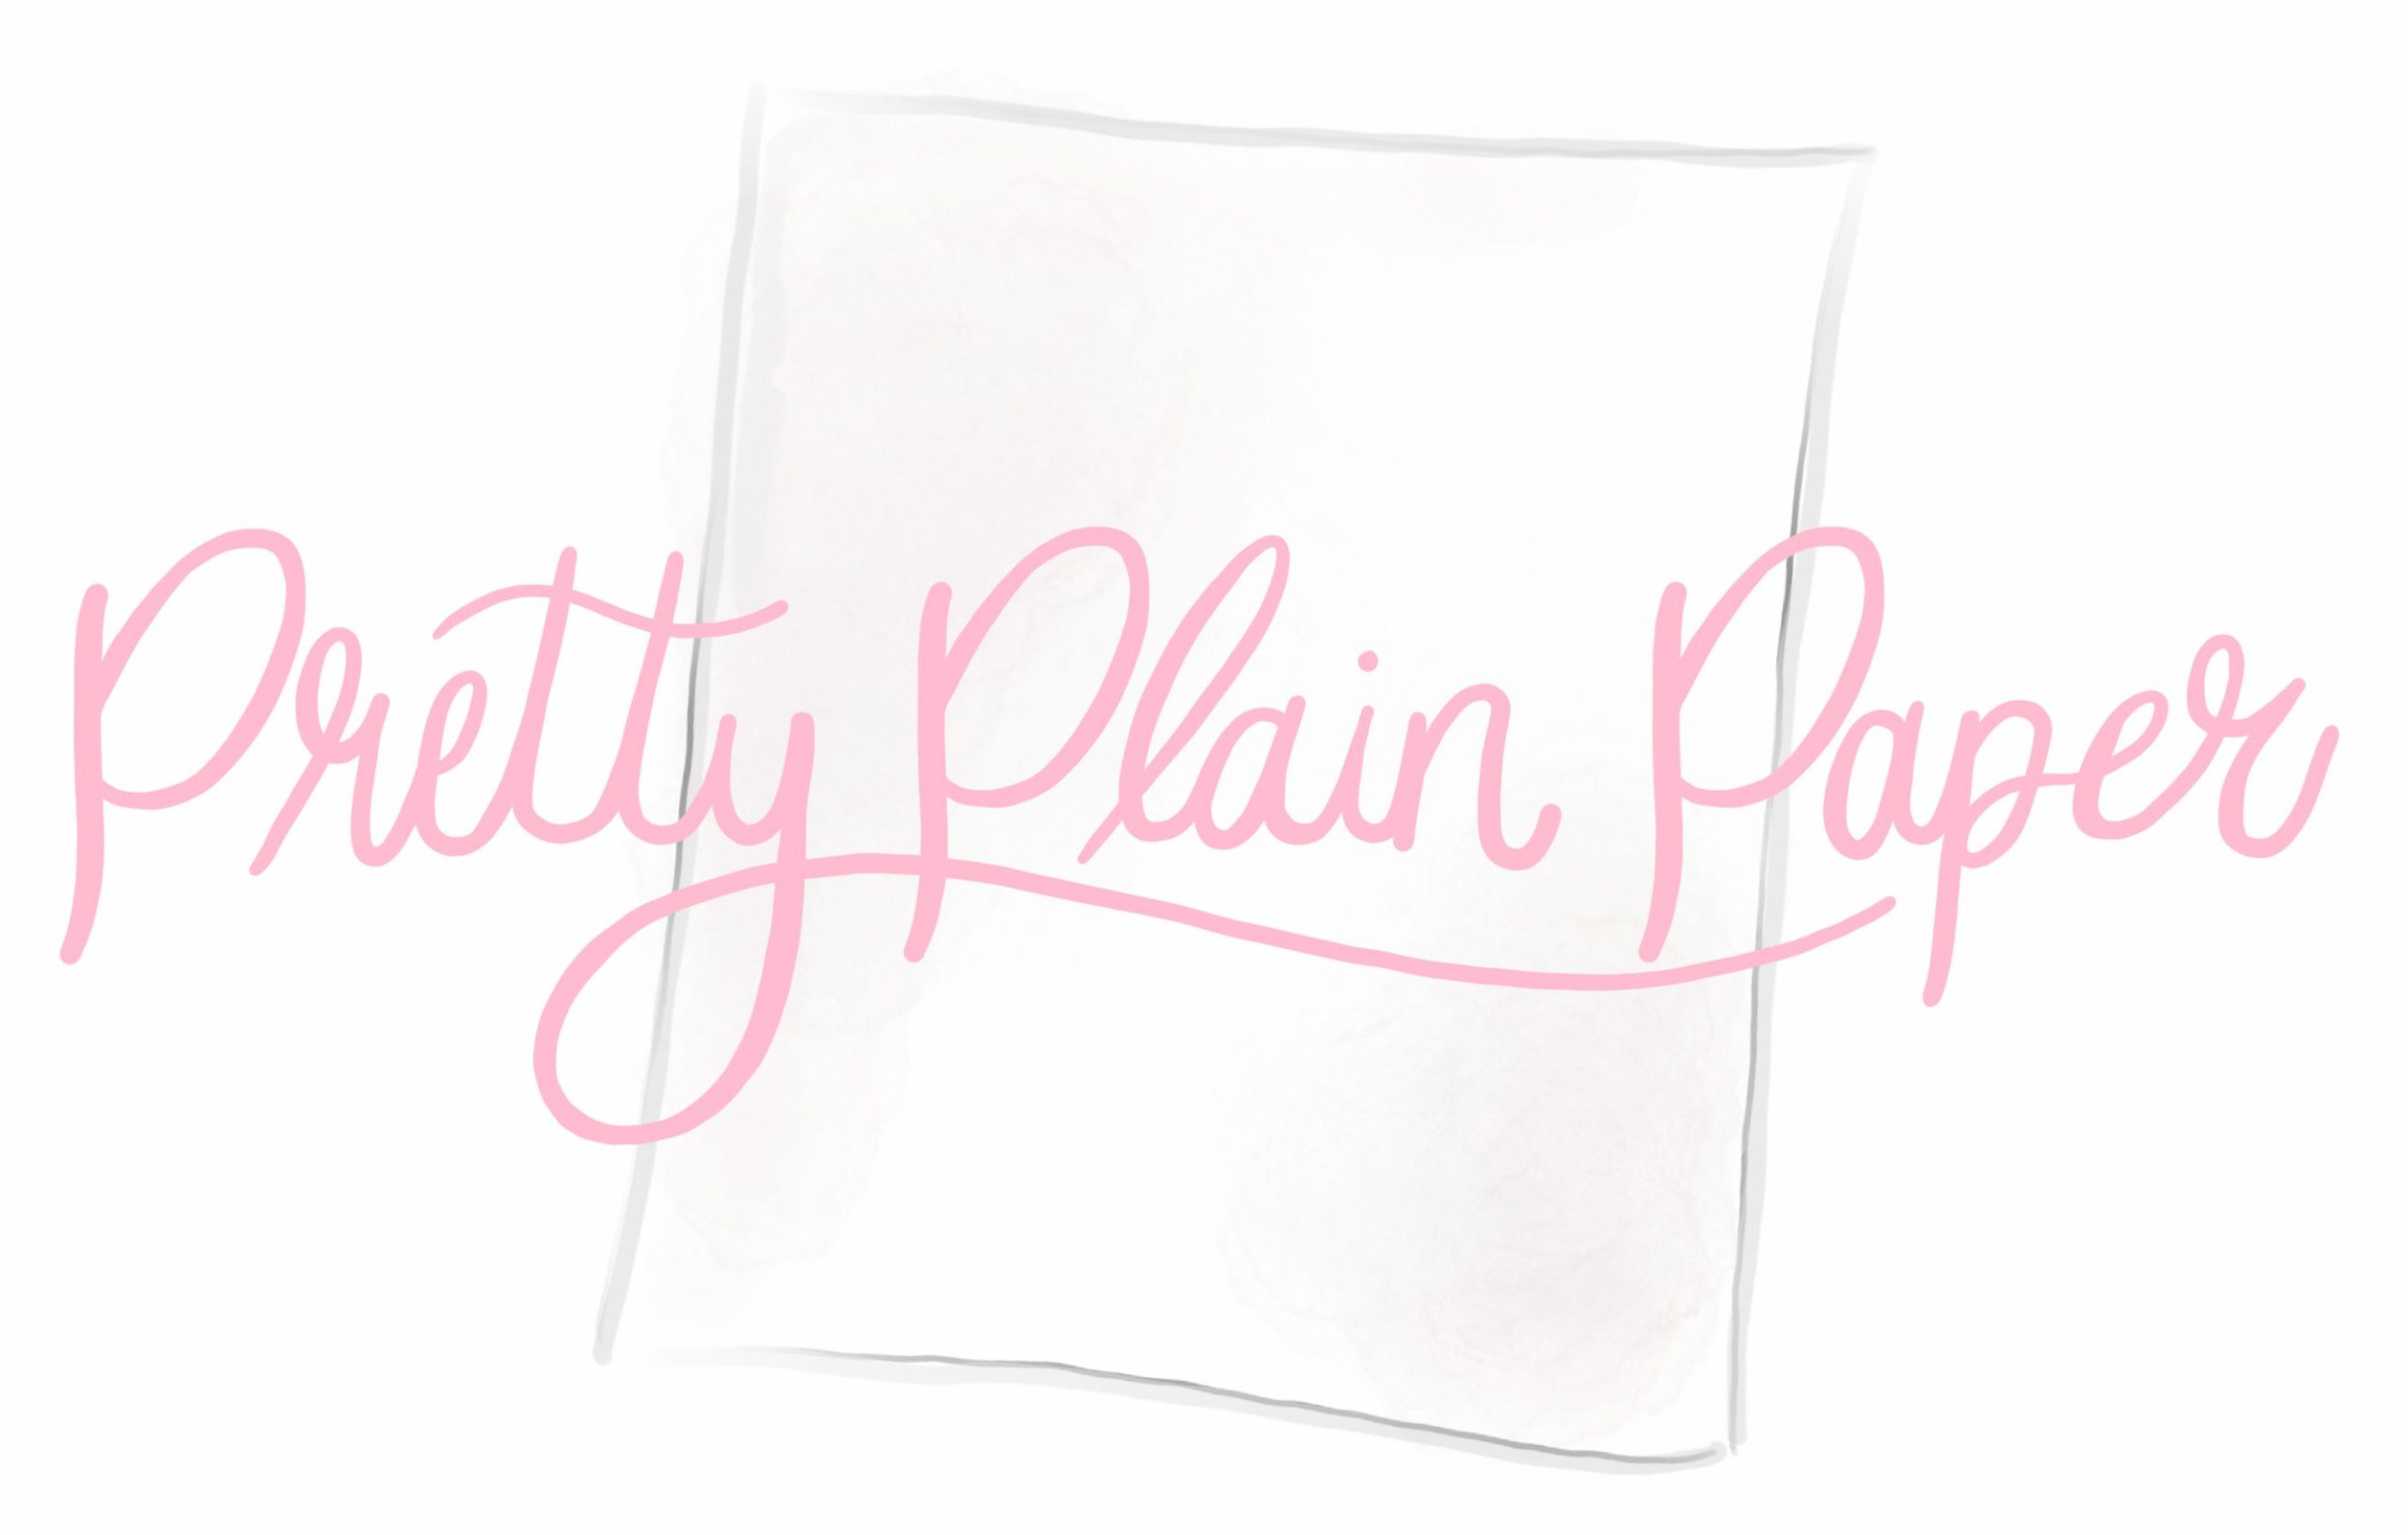 Home - Pretty Plain Paper